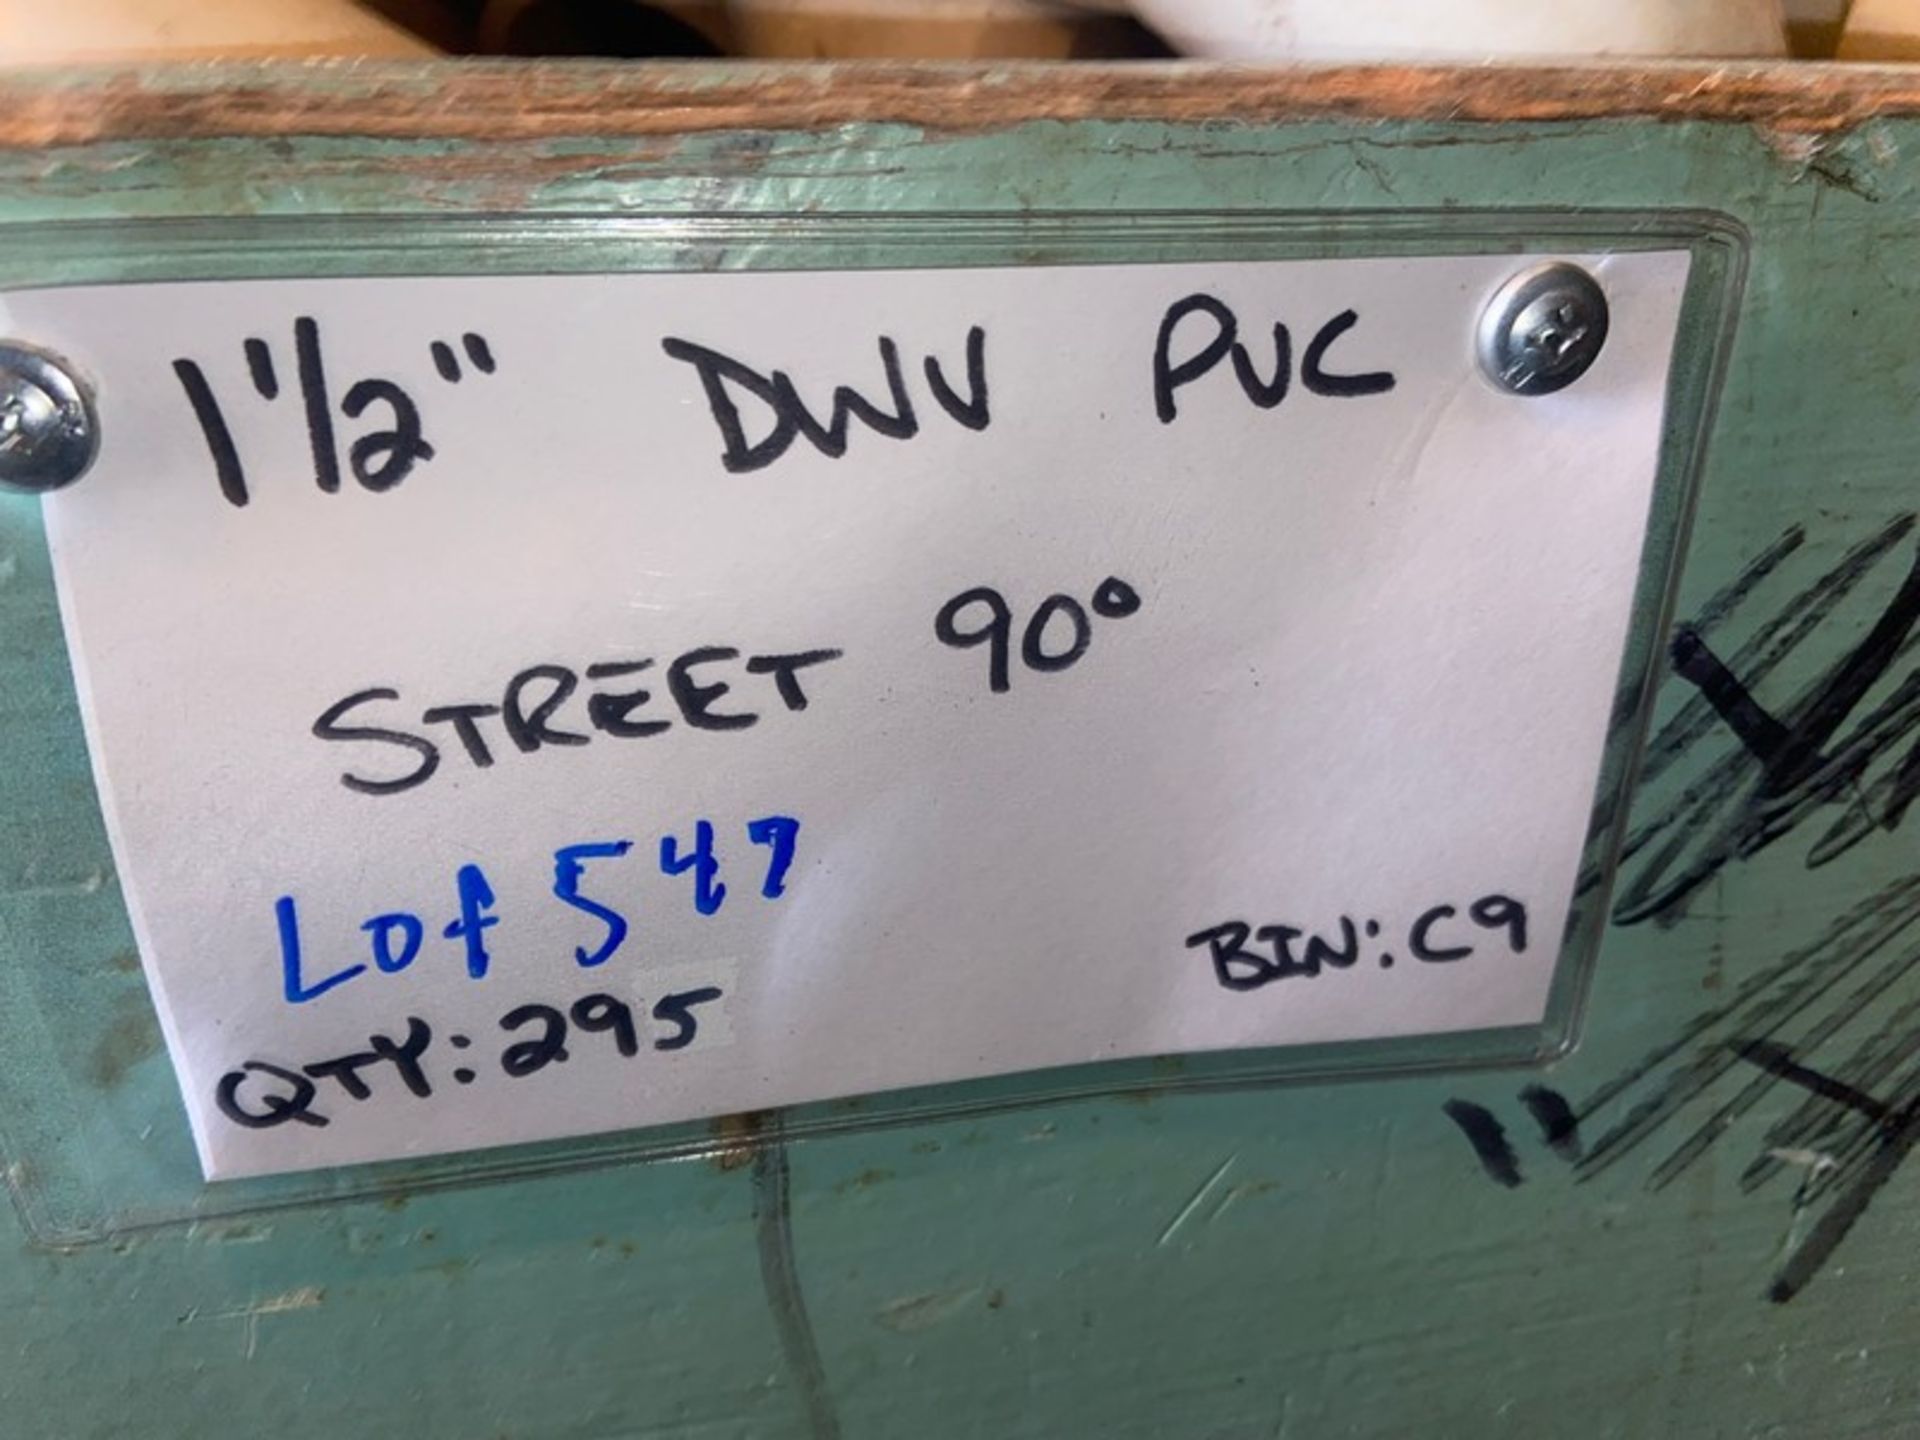 (297) DWV PVC STREET 90’ (Bin:C9) (LOCATED IN MONROEVILLE, PA) - Image 3 of 5